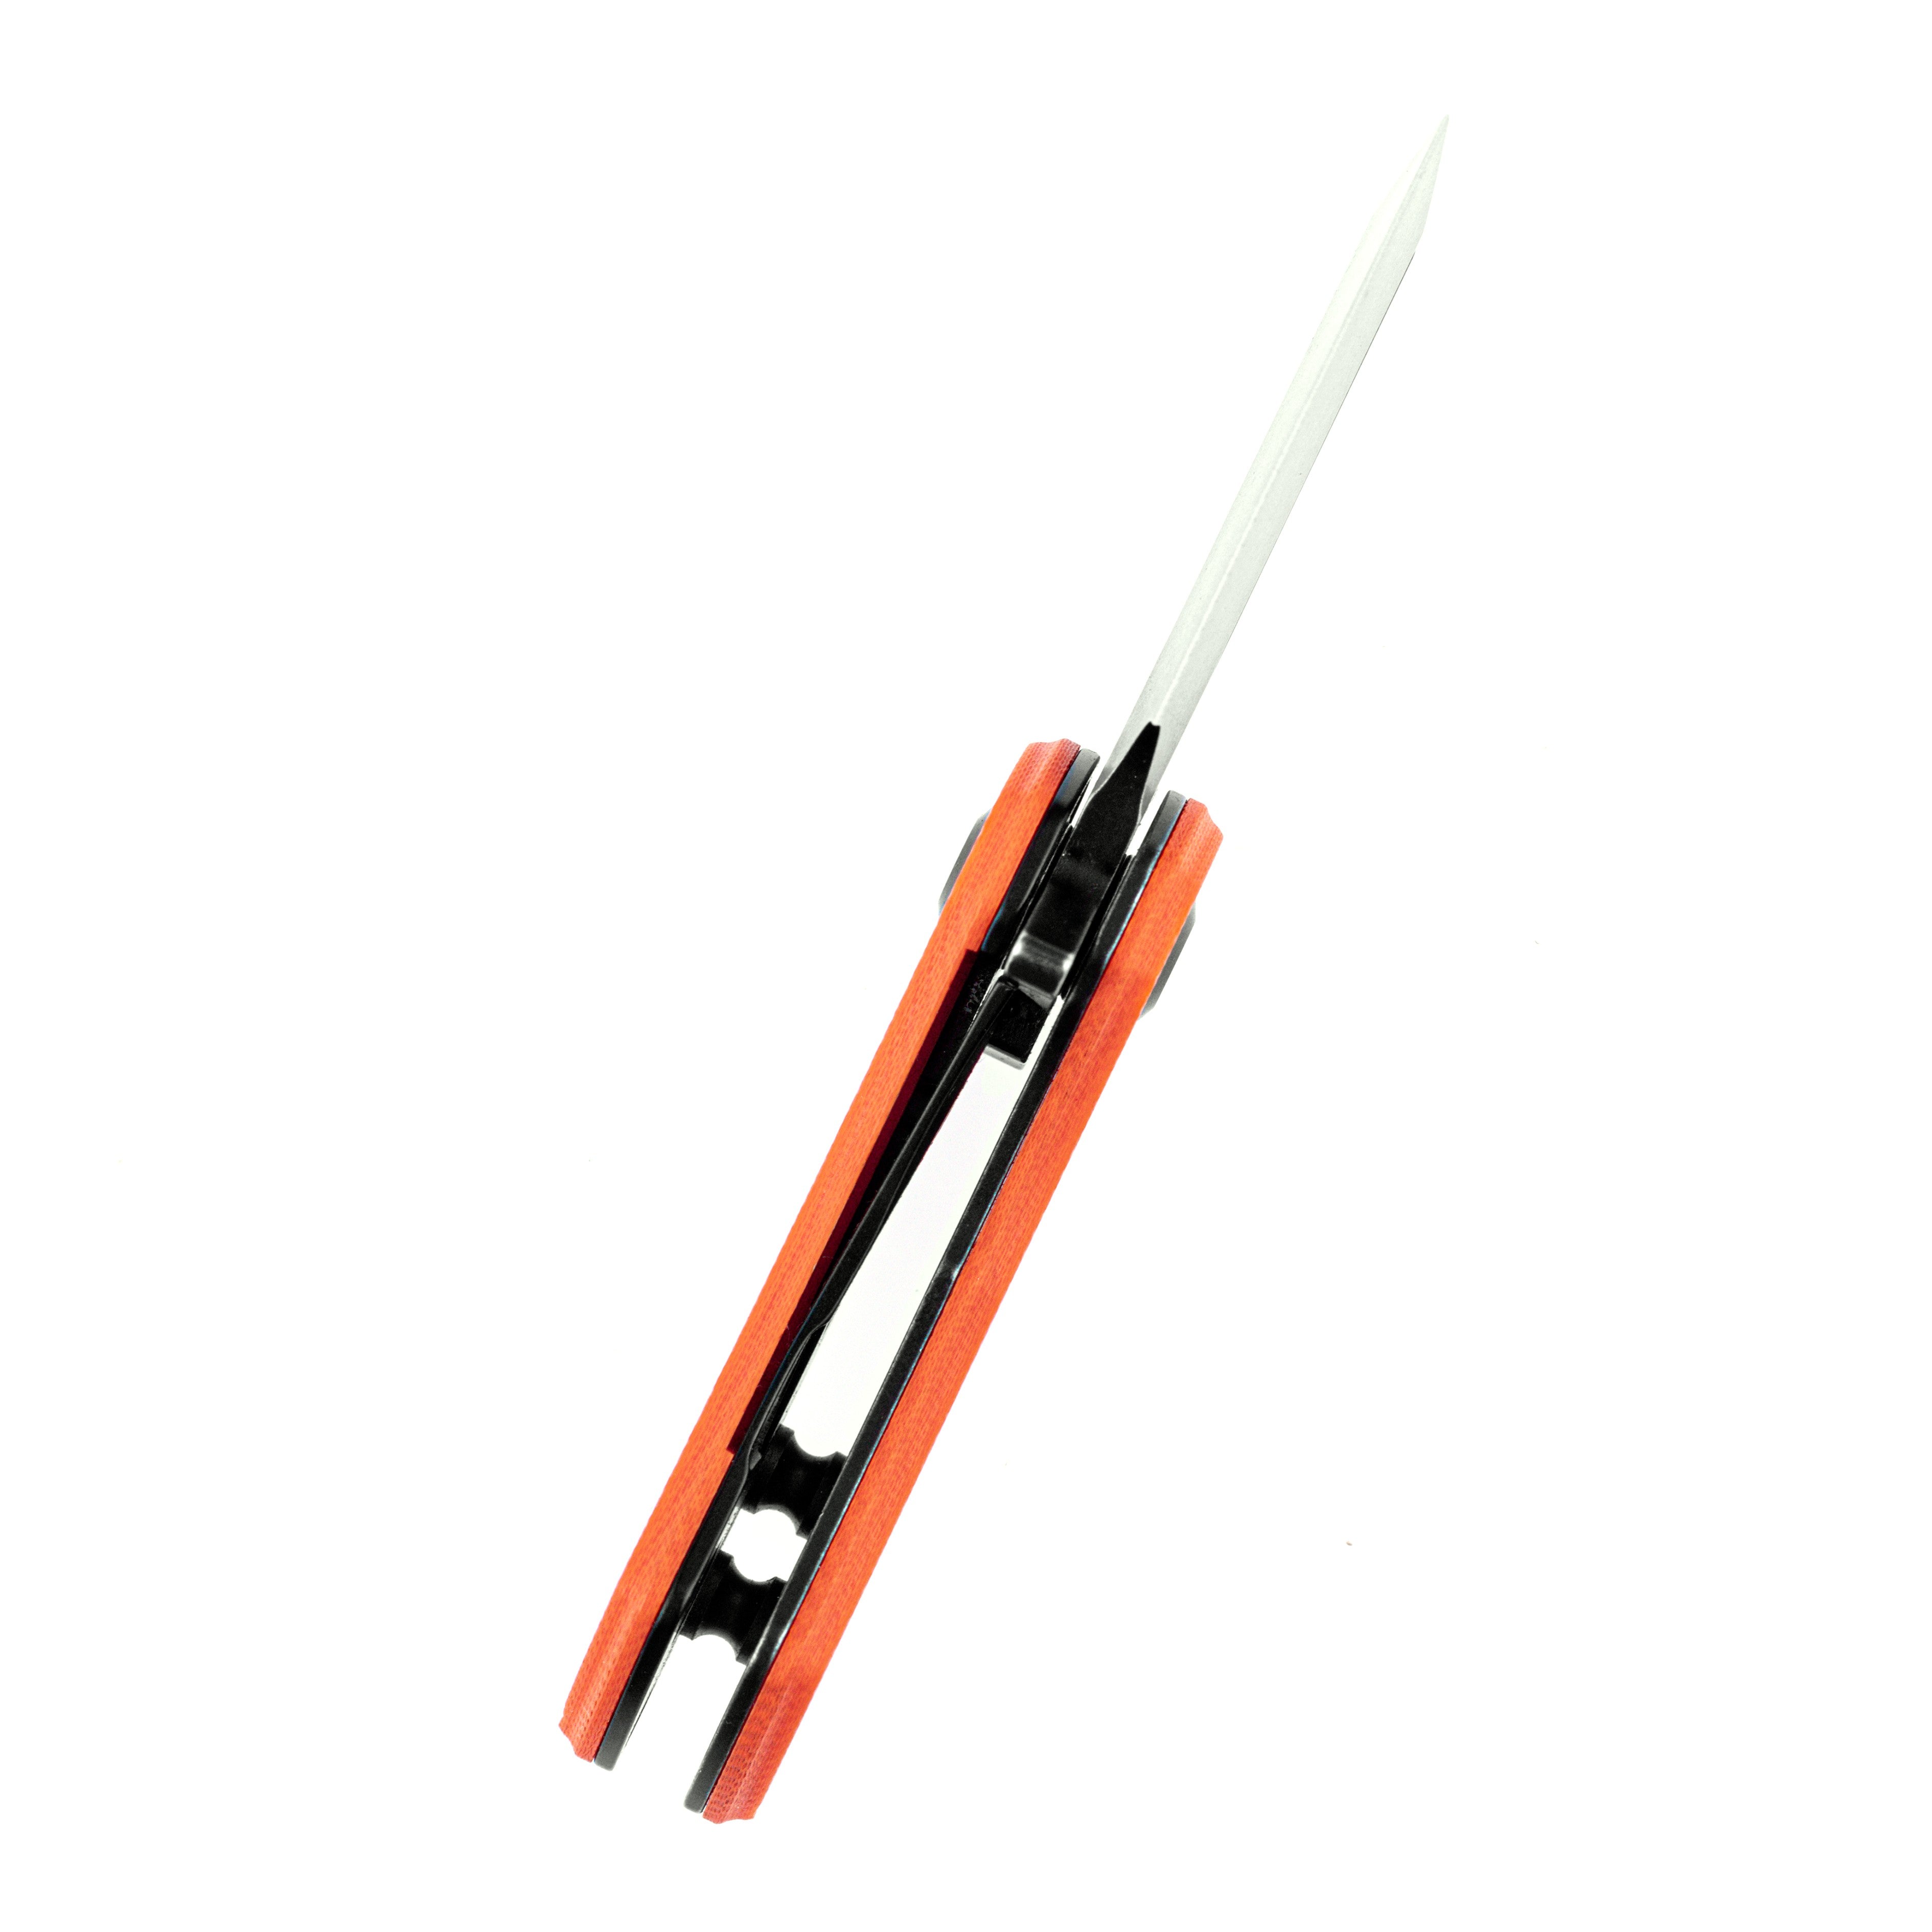 Kansept Knives T3030A7 Mini Korvid 154CM Blade Orange G10 Handle Liner Lock Edc Knives